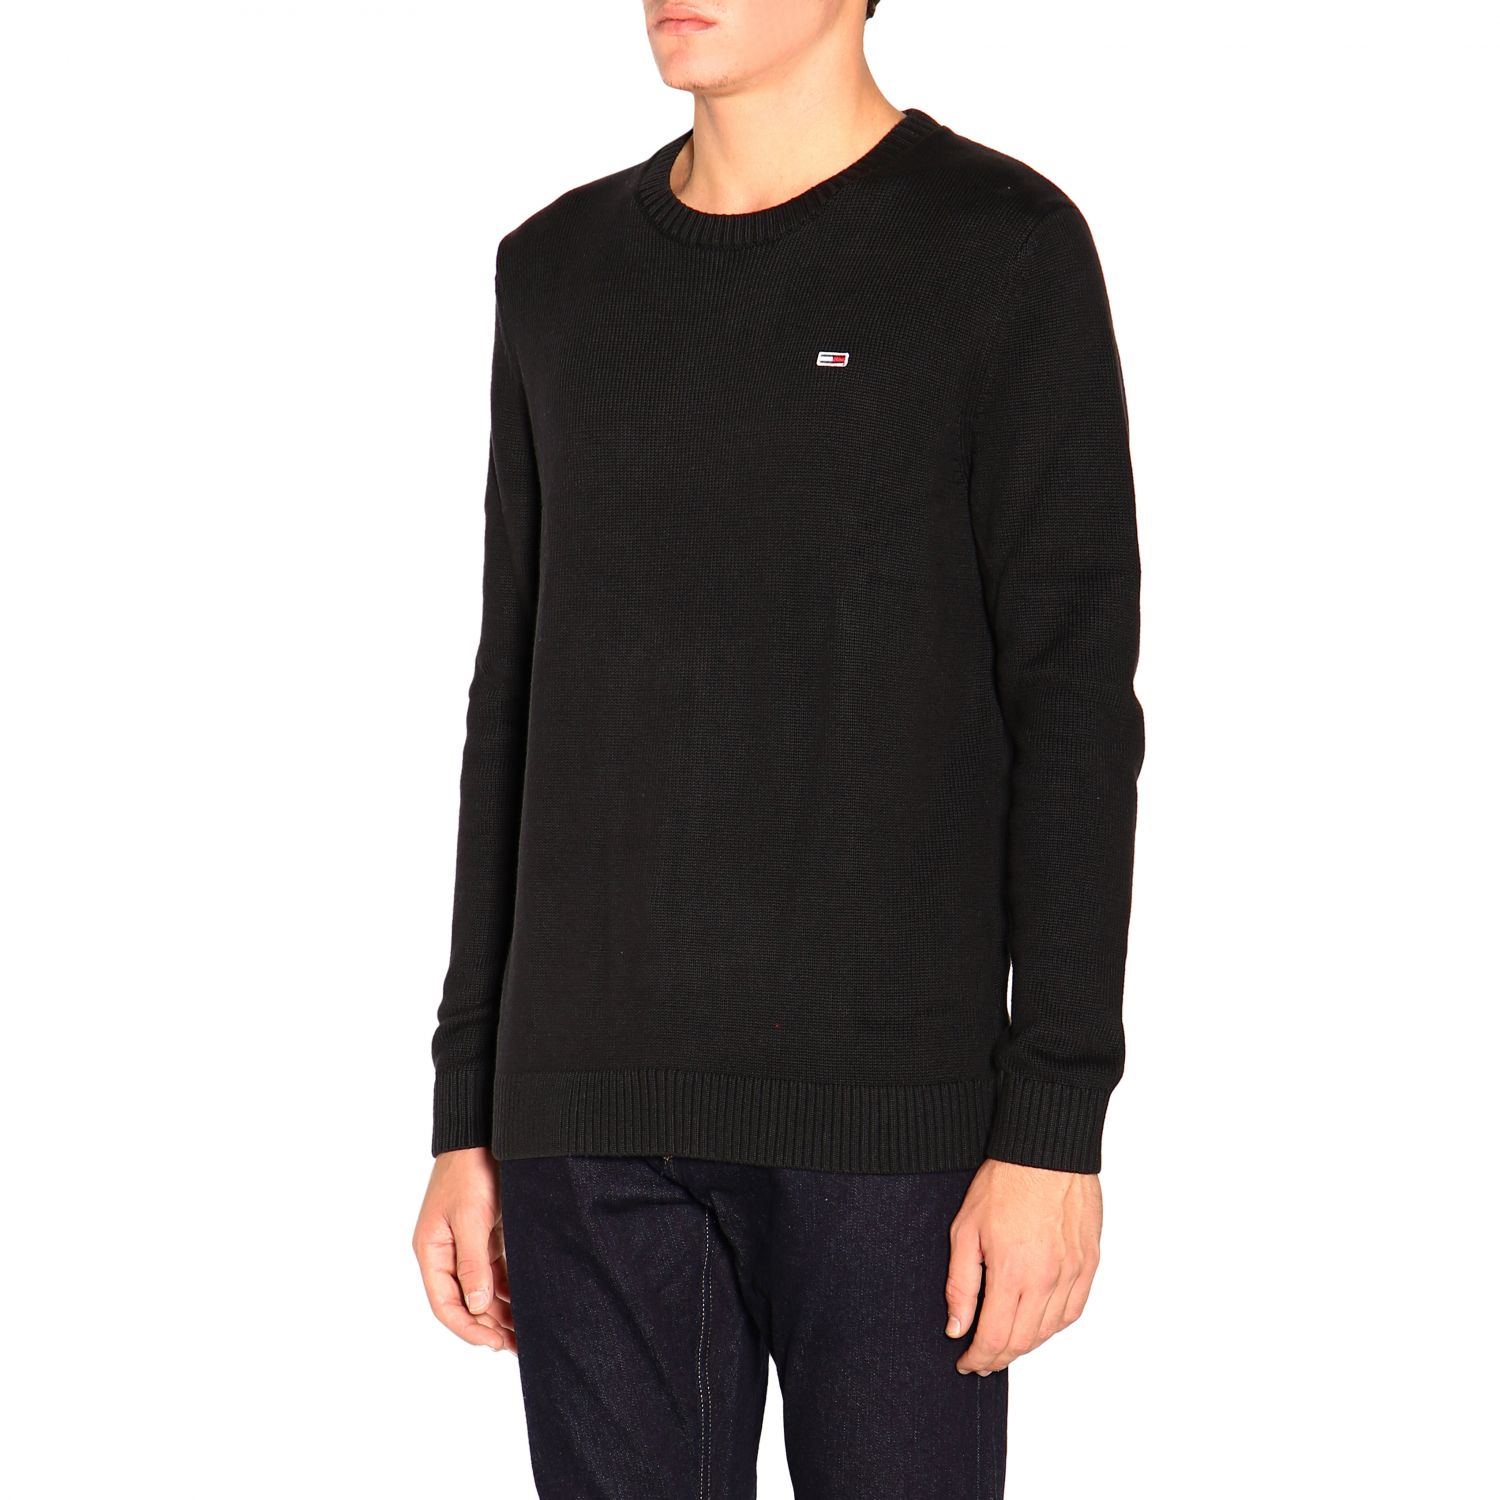 black hilfiger sweater